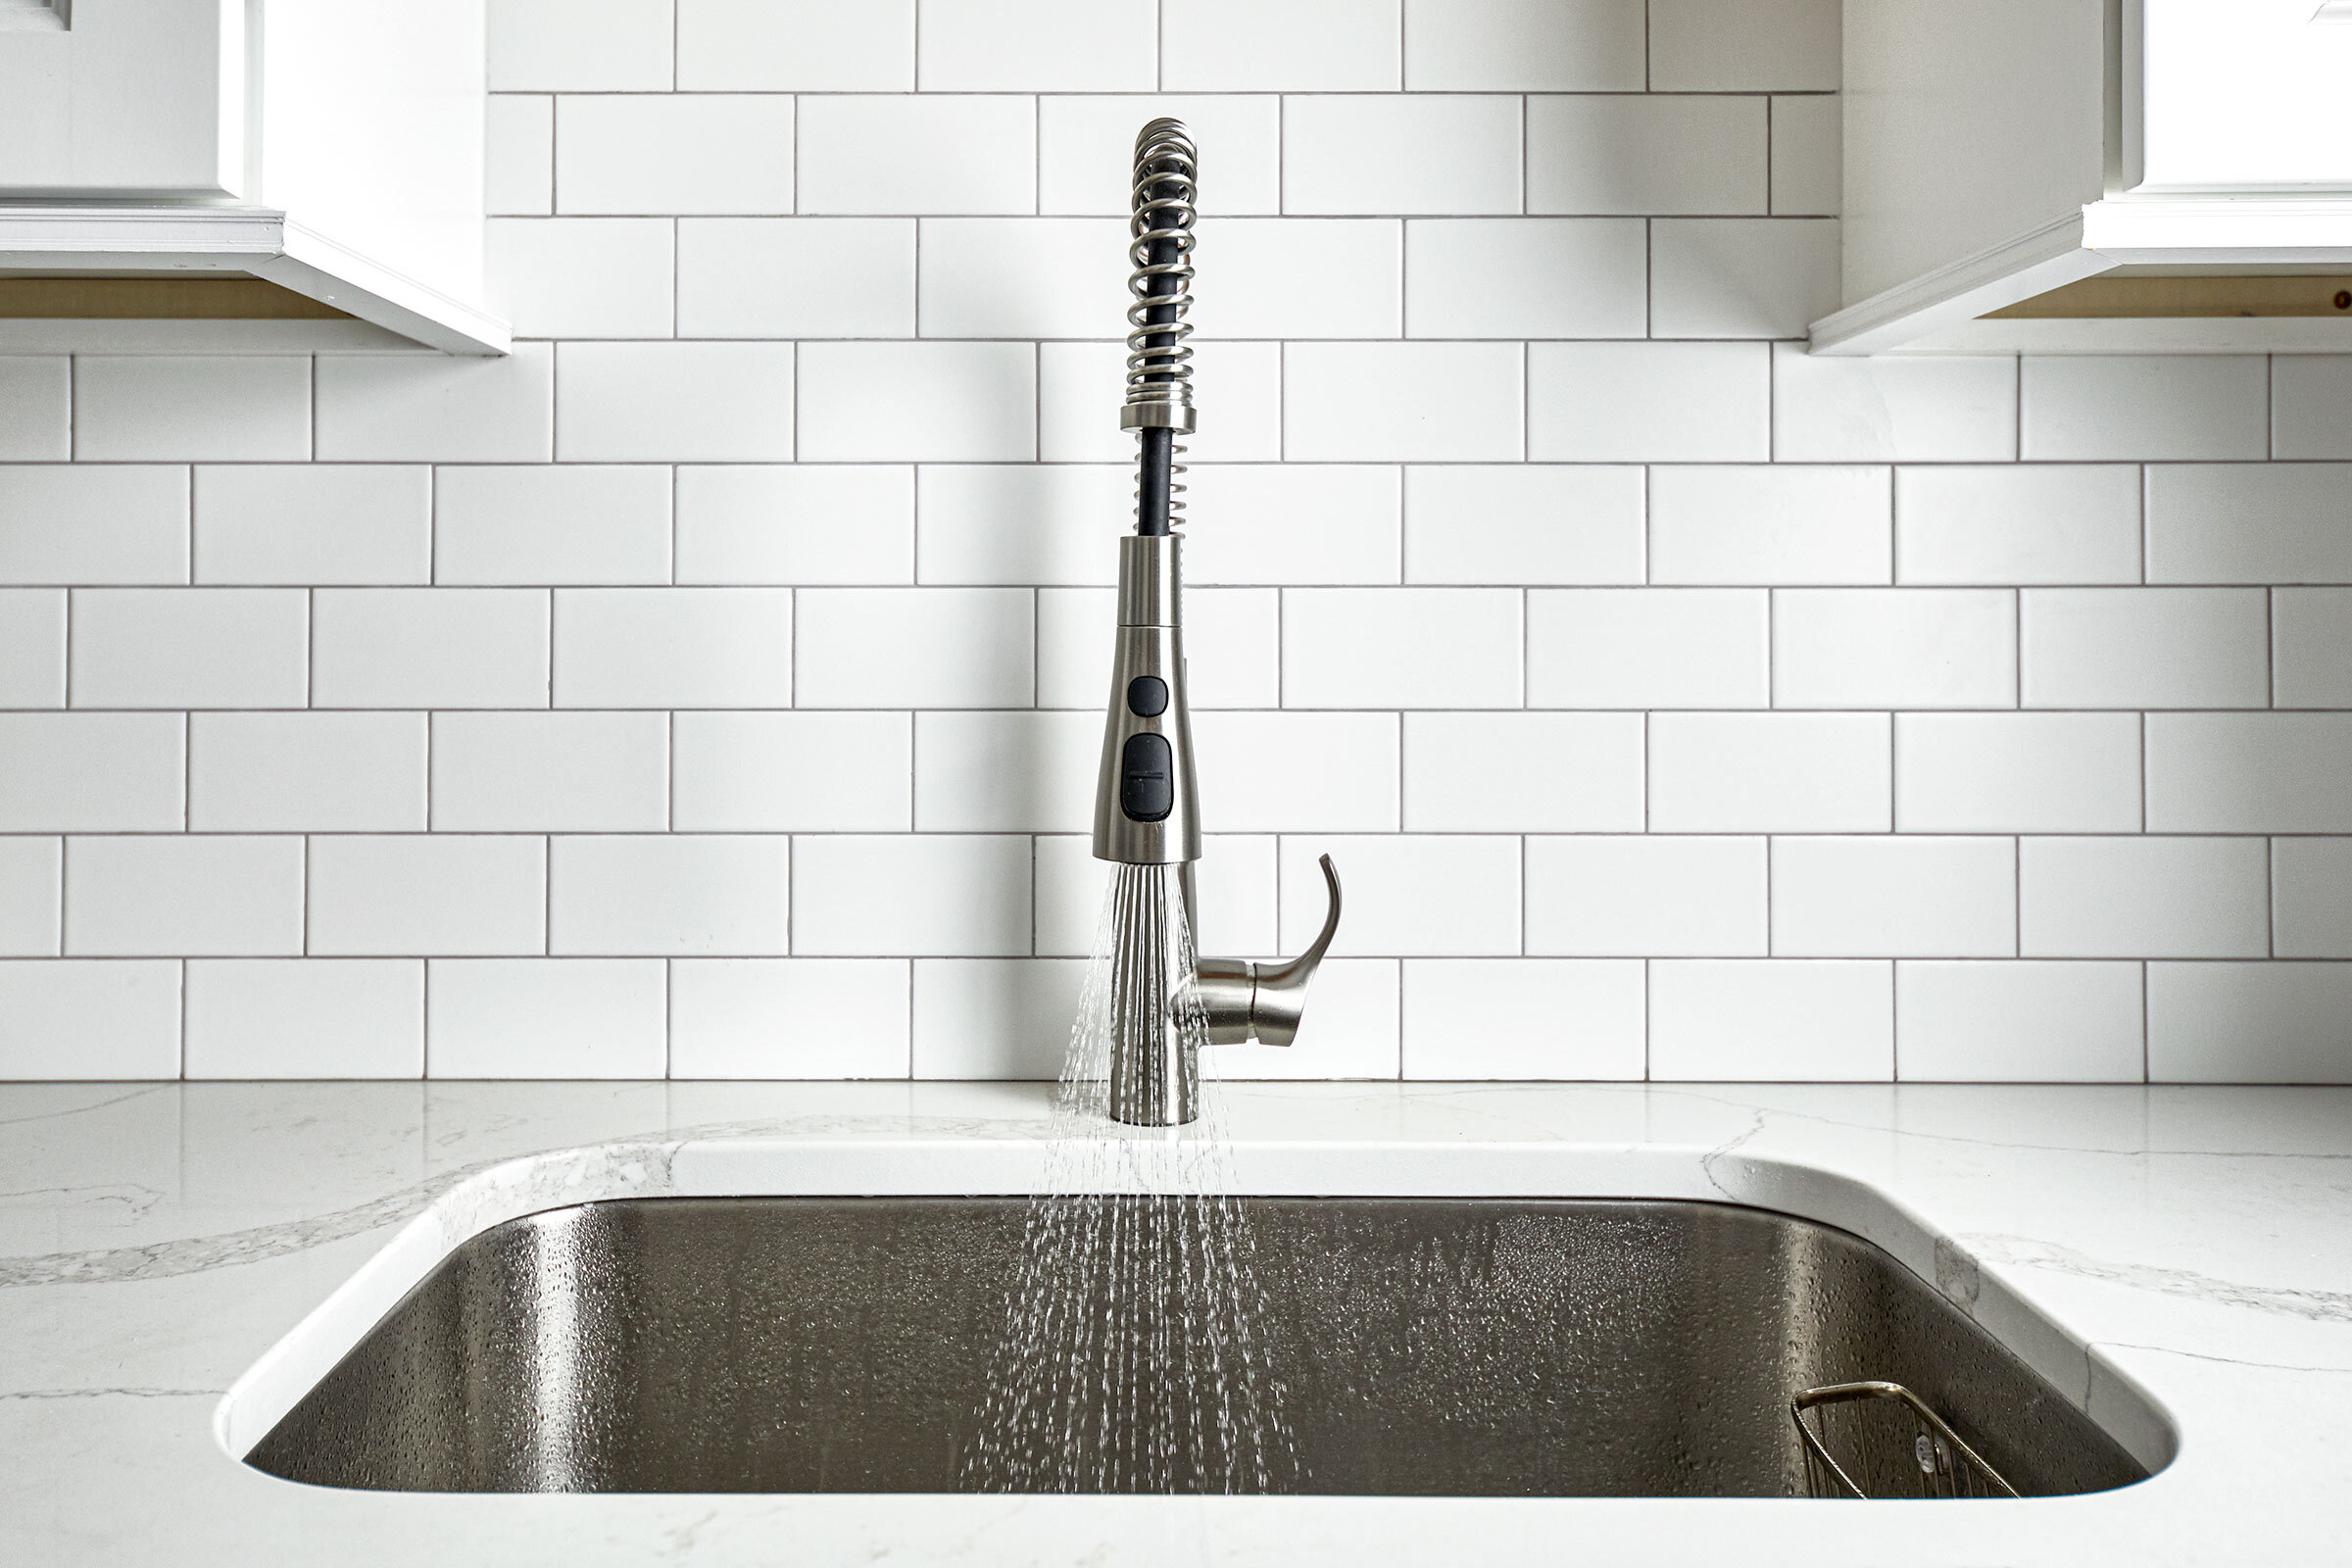 thompson-fine-home-renovations-kitchen-subway-tile-faucet.jpg